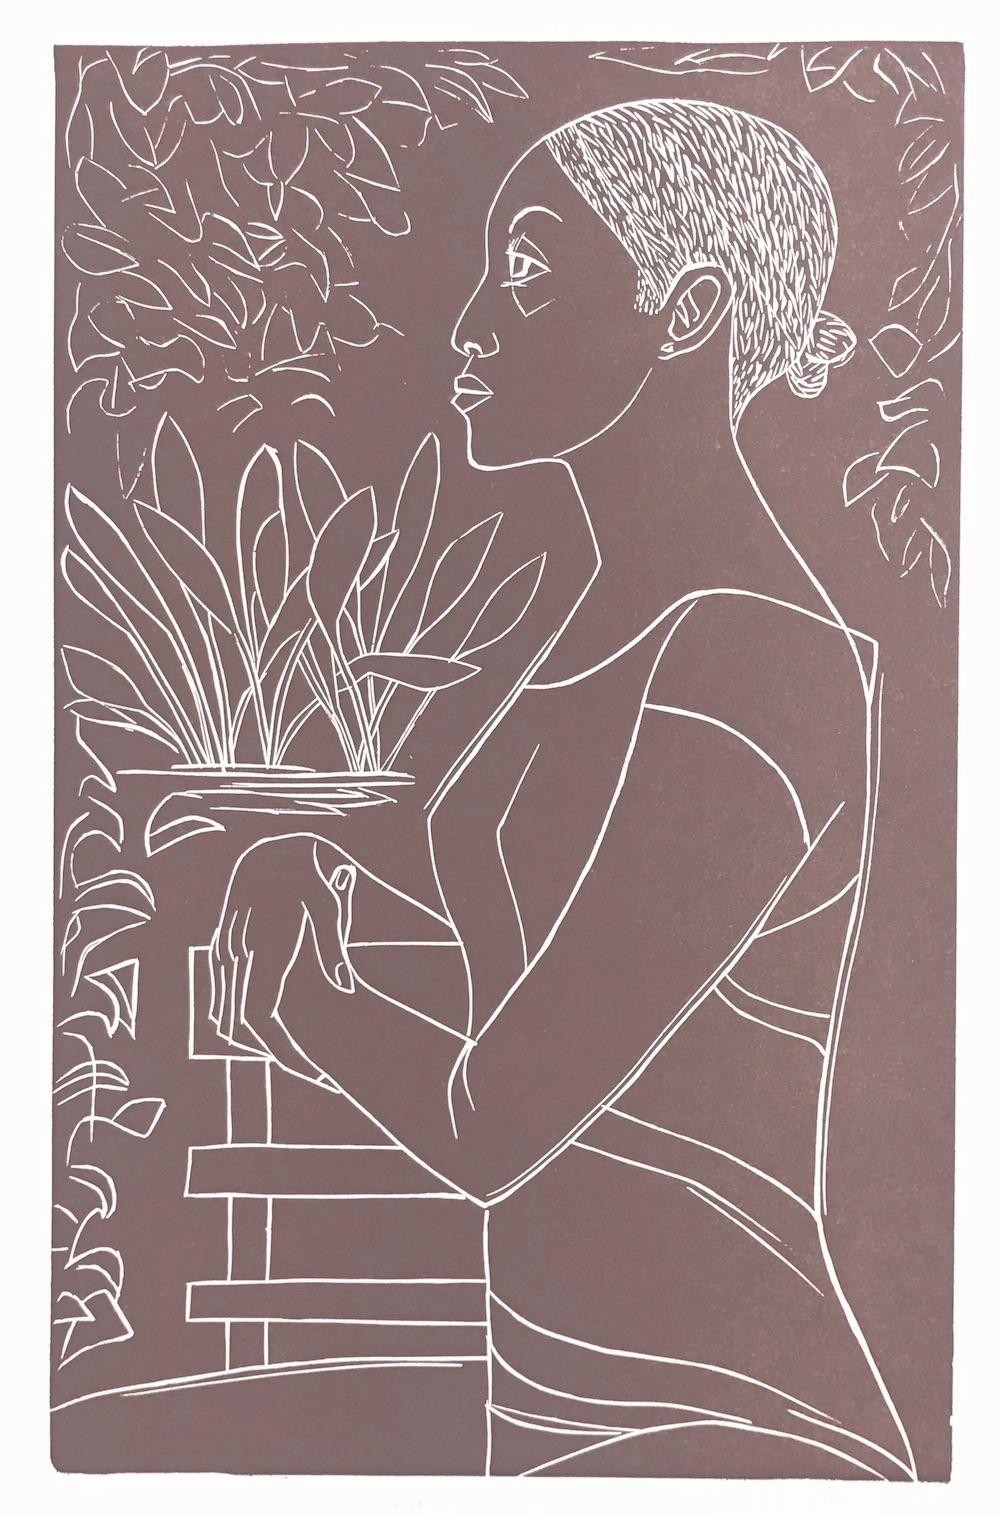 GLORY Signed Linocut, Poetic Female Portrait, Black Woman, White Line Drawing - Print by Elizabeth Catlett